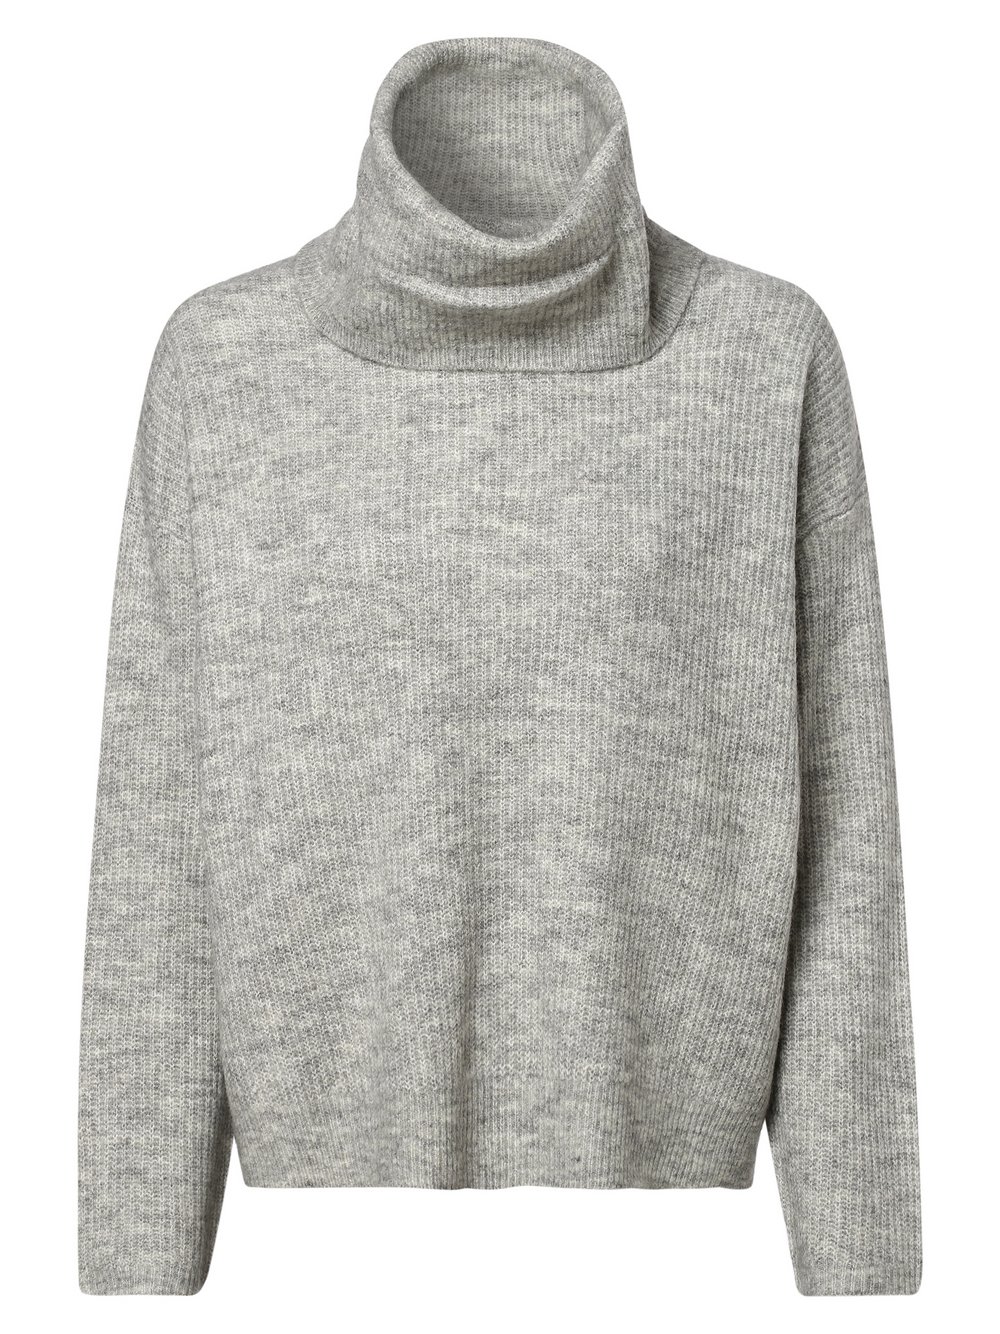 Rabatt 57 % VILA Pullover Weiß M DAMEN Pullovers & Sweatshirts Elegant 